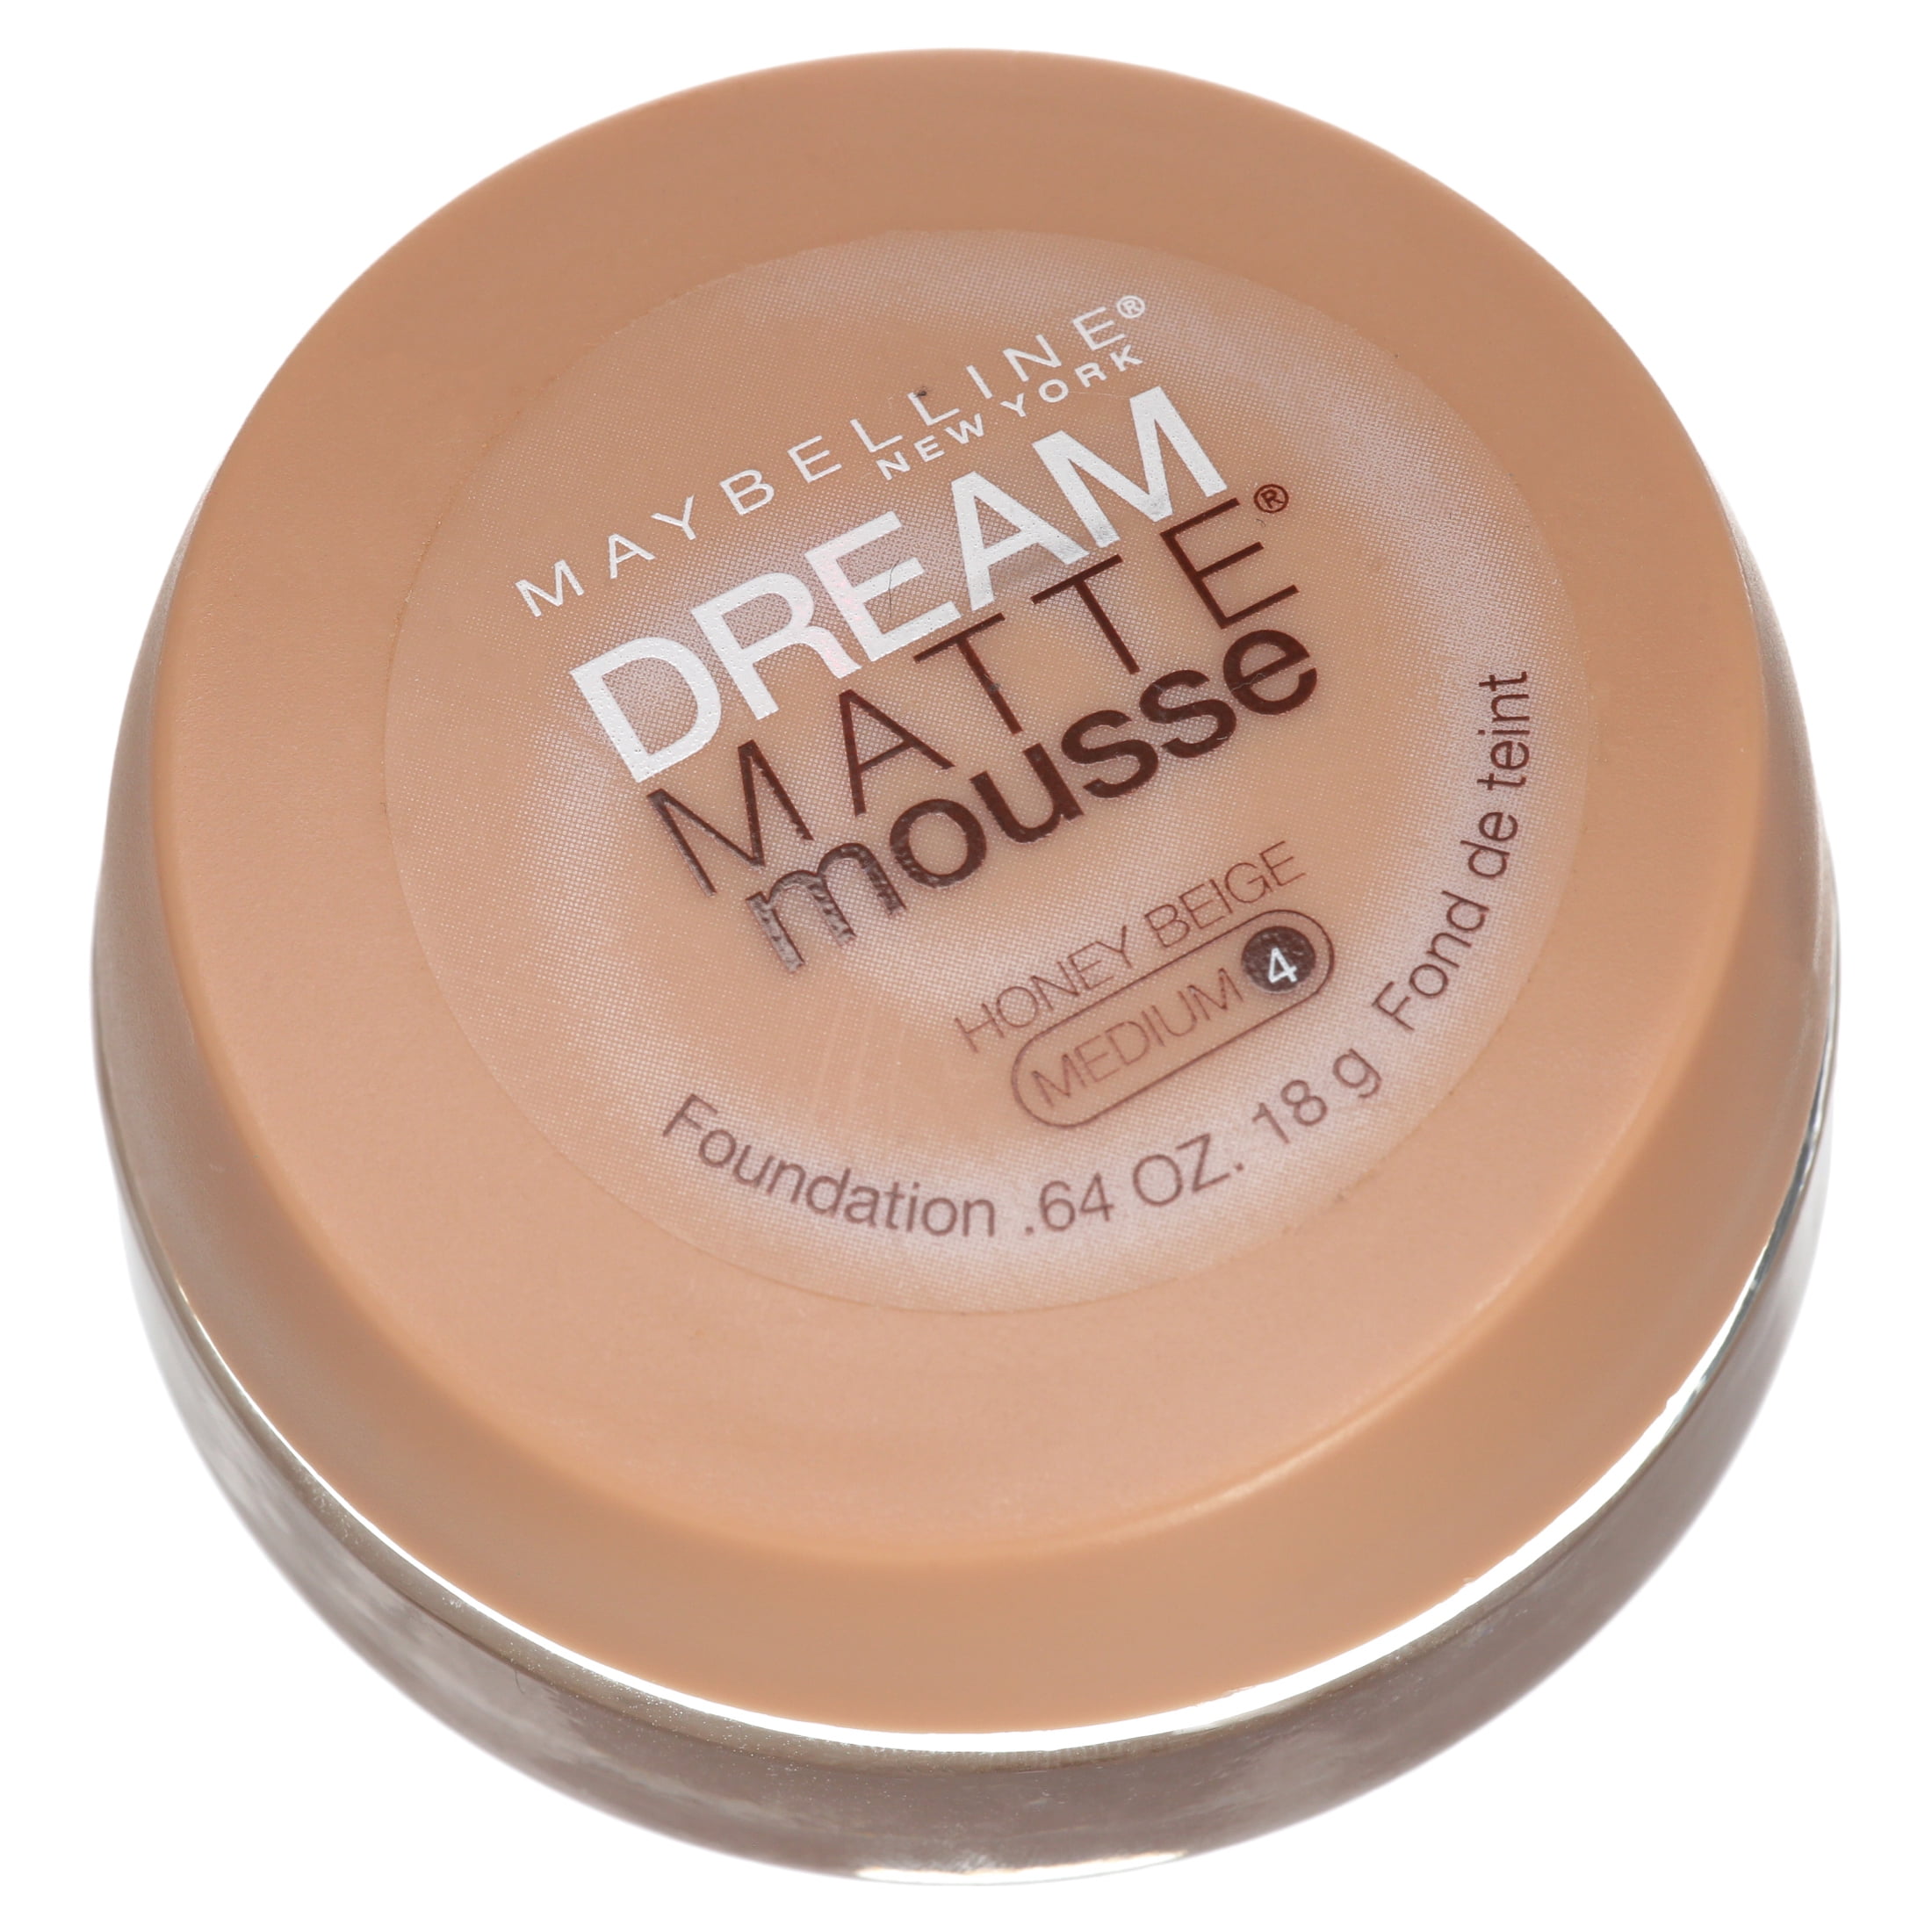 Maybelline New York - Base de maquillaje Dream Matte Mousse, Caramel, Dark  2, 0.64 onzas, el embalaje puede variar